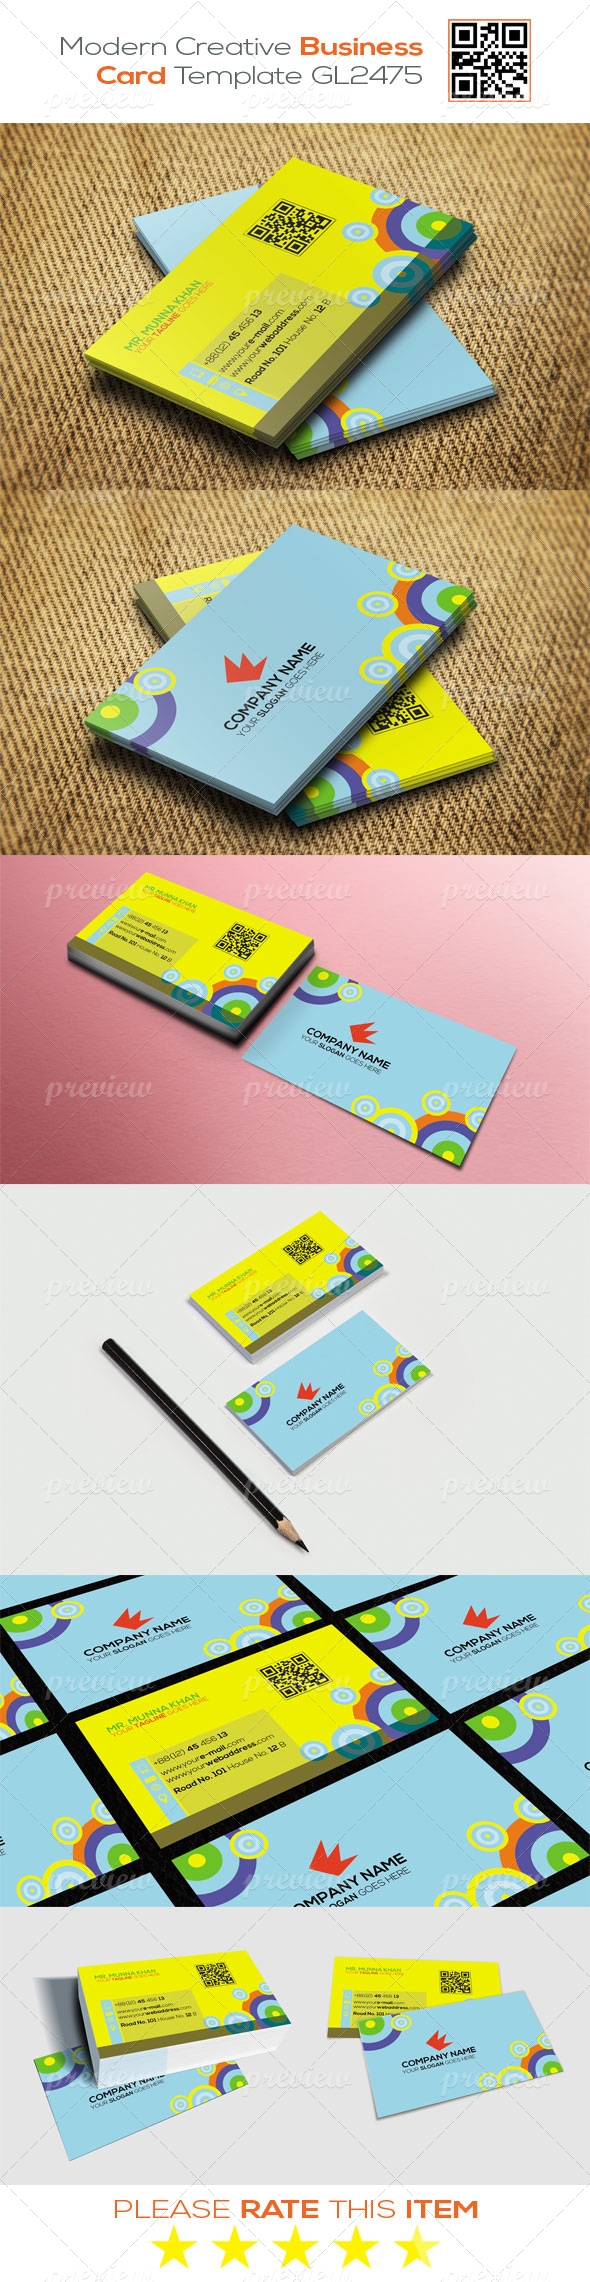 Modern Creative Business Card Template GL2475